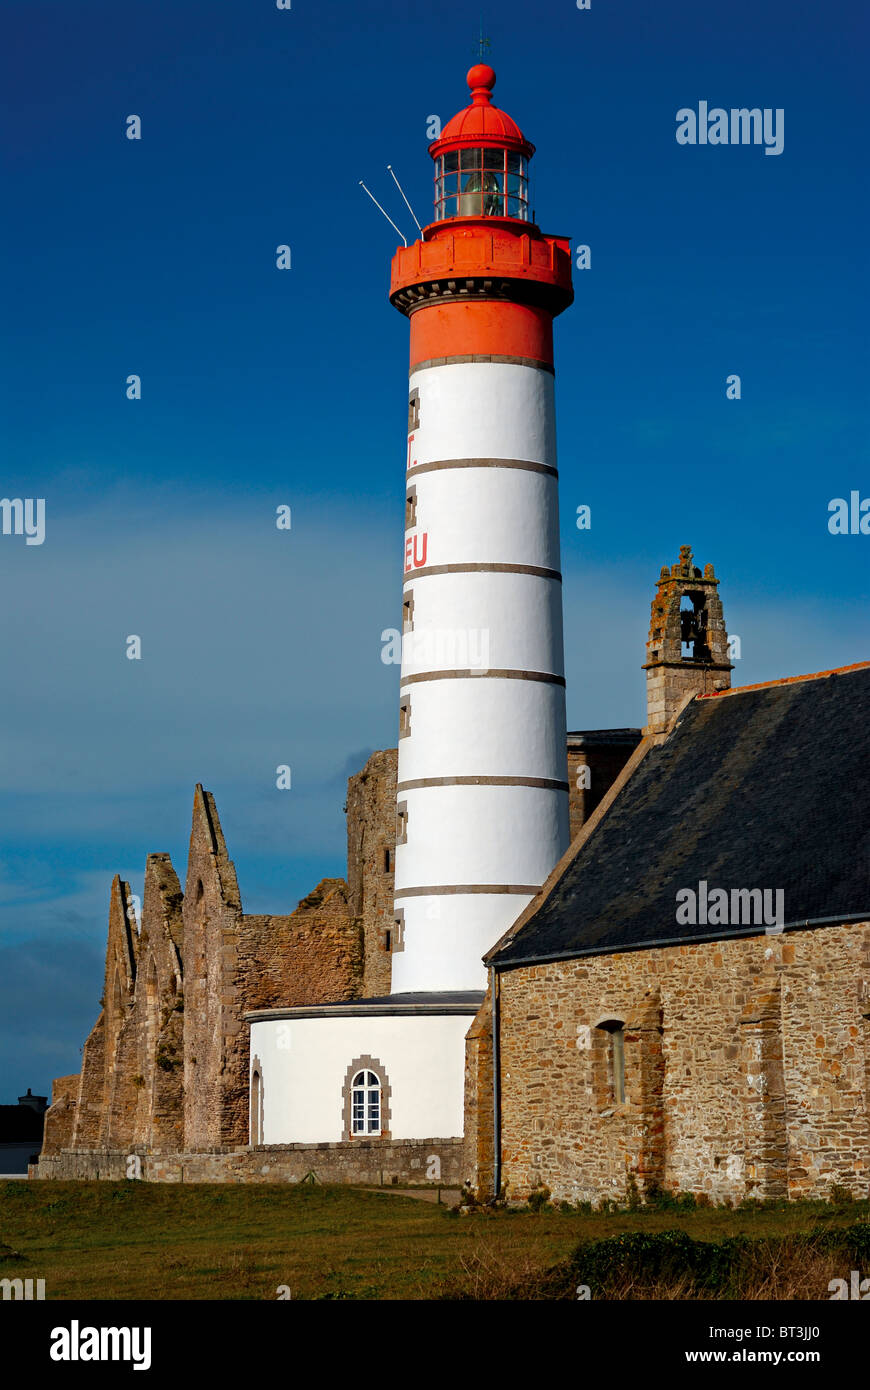 France, Brittany: Lighthouse of Pointe de Saint Mathieu Stock Photo